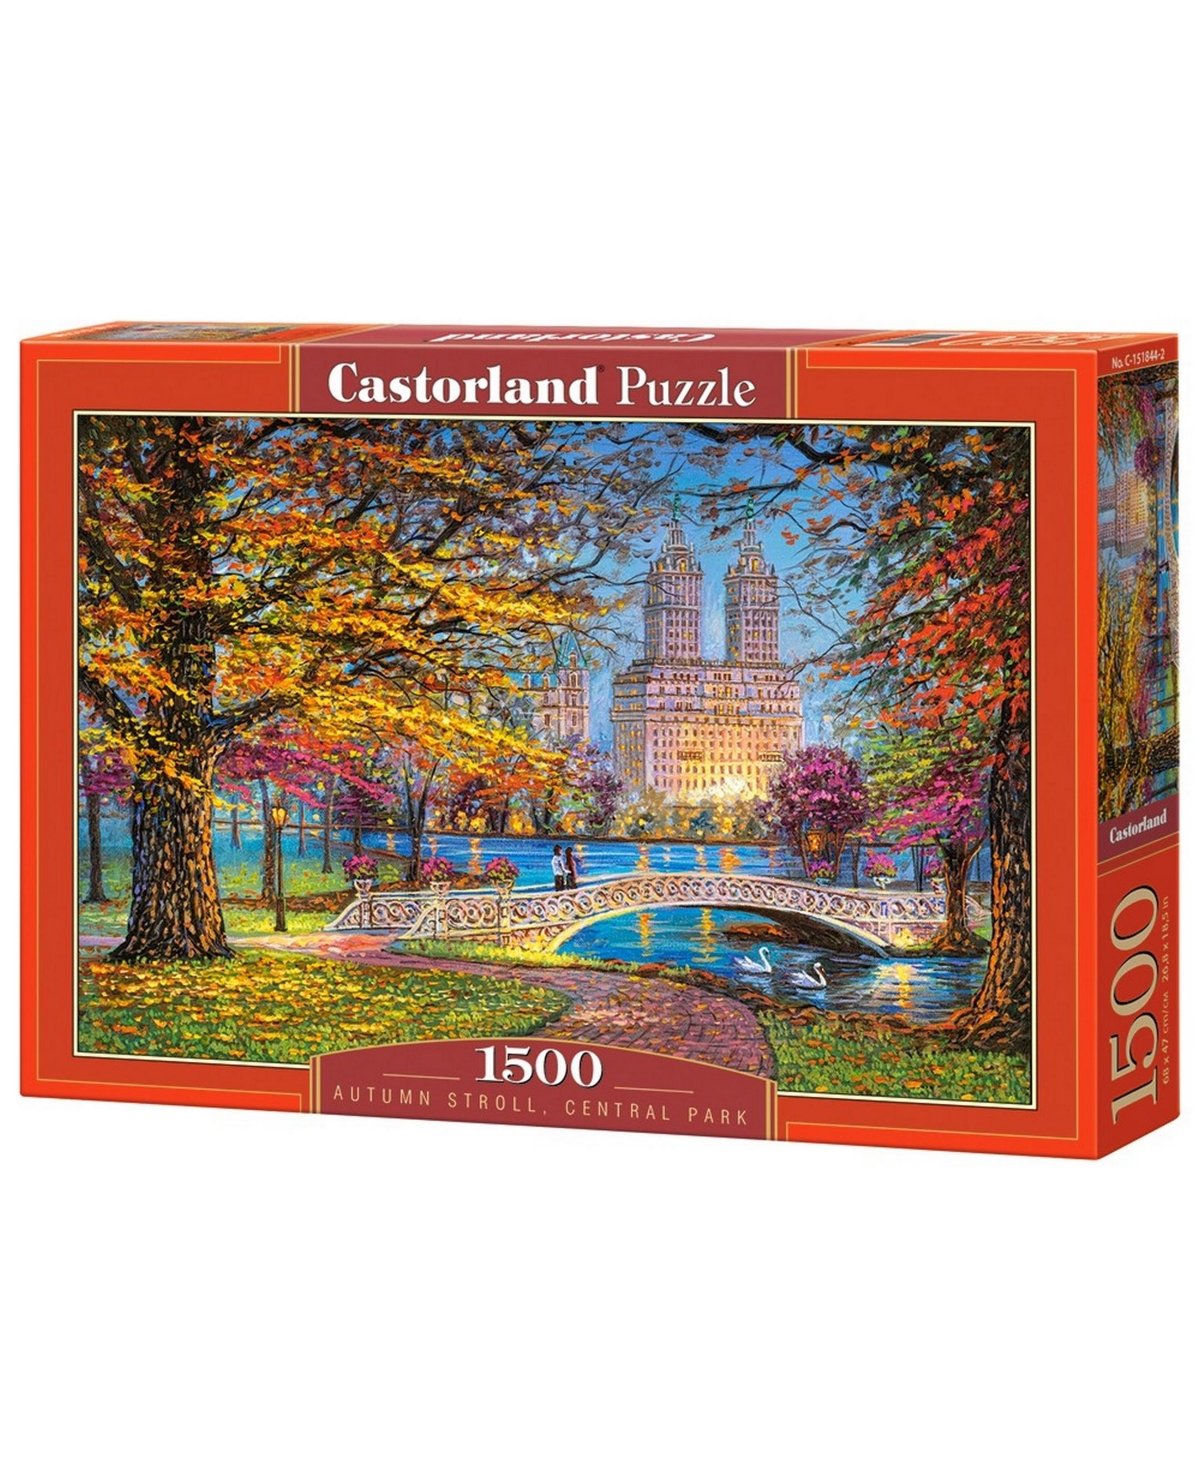 Castorland Autumn Stroll, Central Park Jigsaw Puzzle Set, 1500 Piece In Multicolor